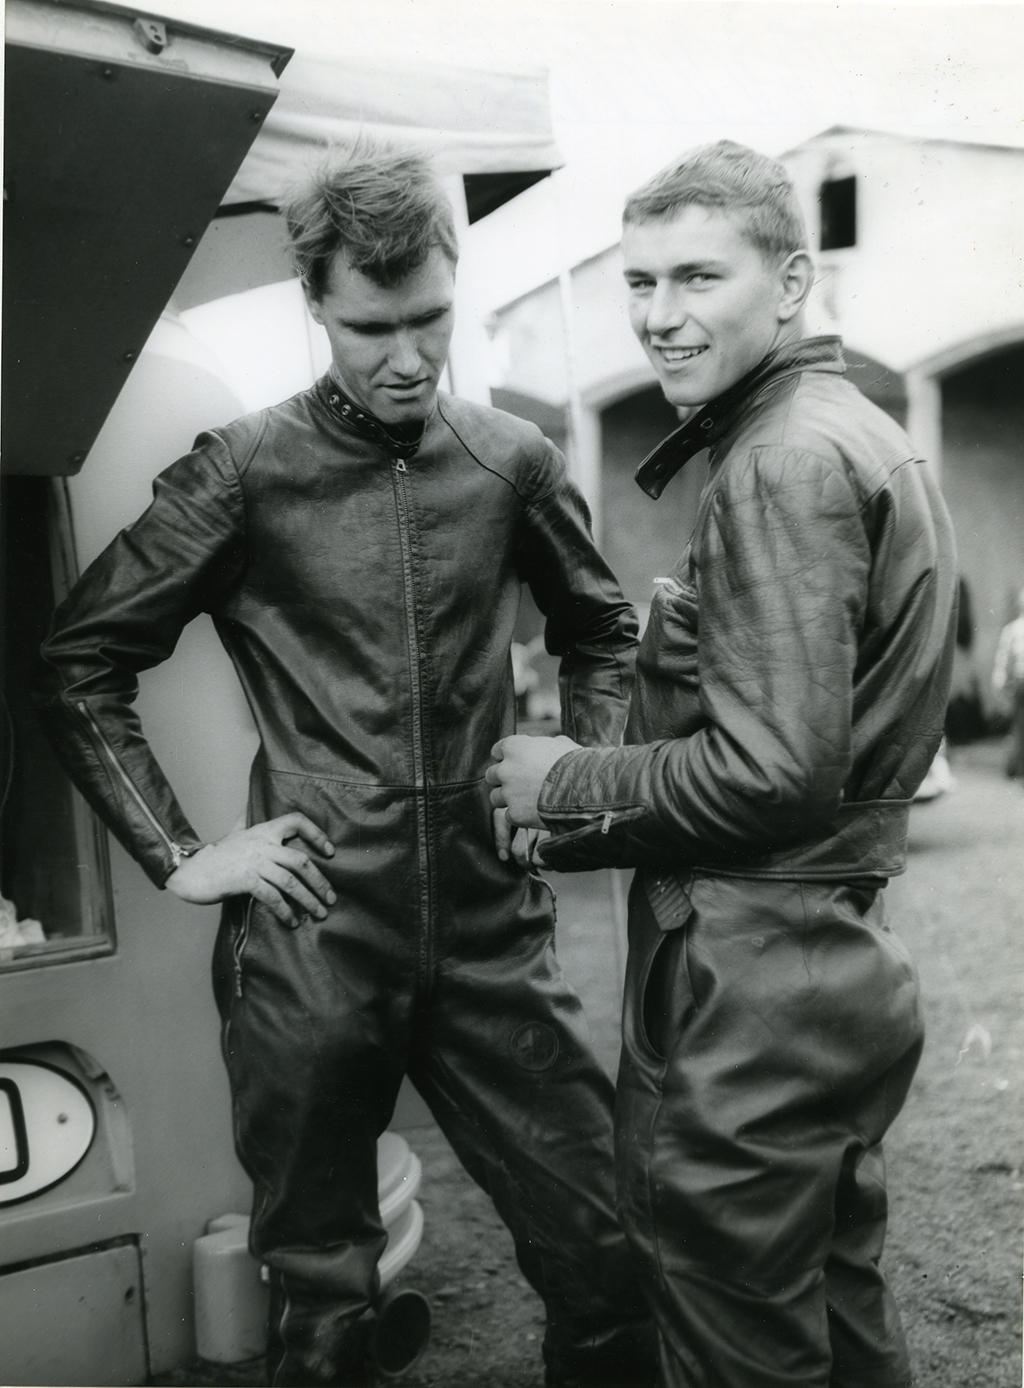 Two men wearing leathers